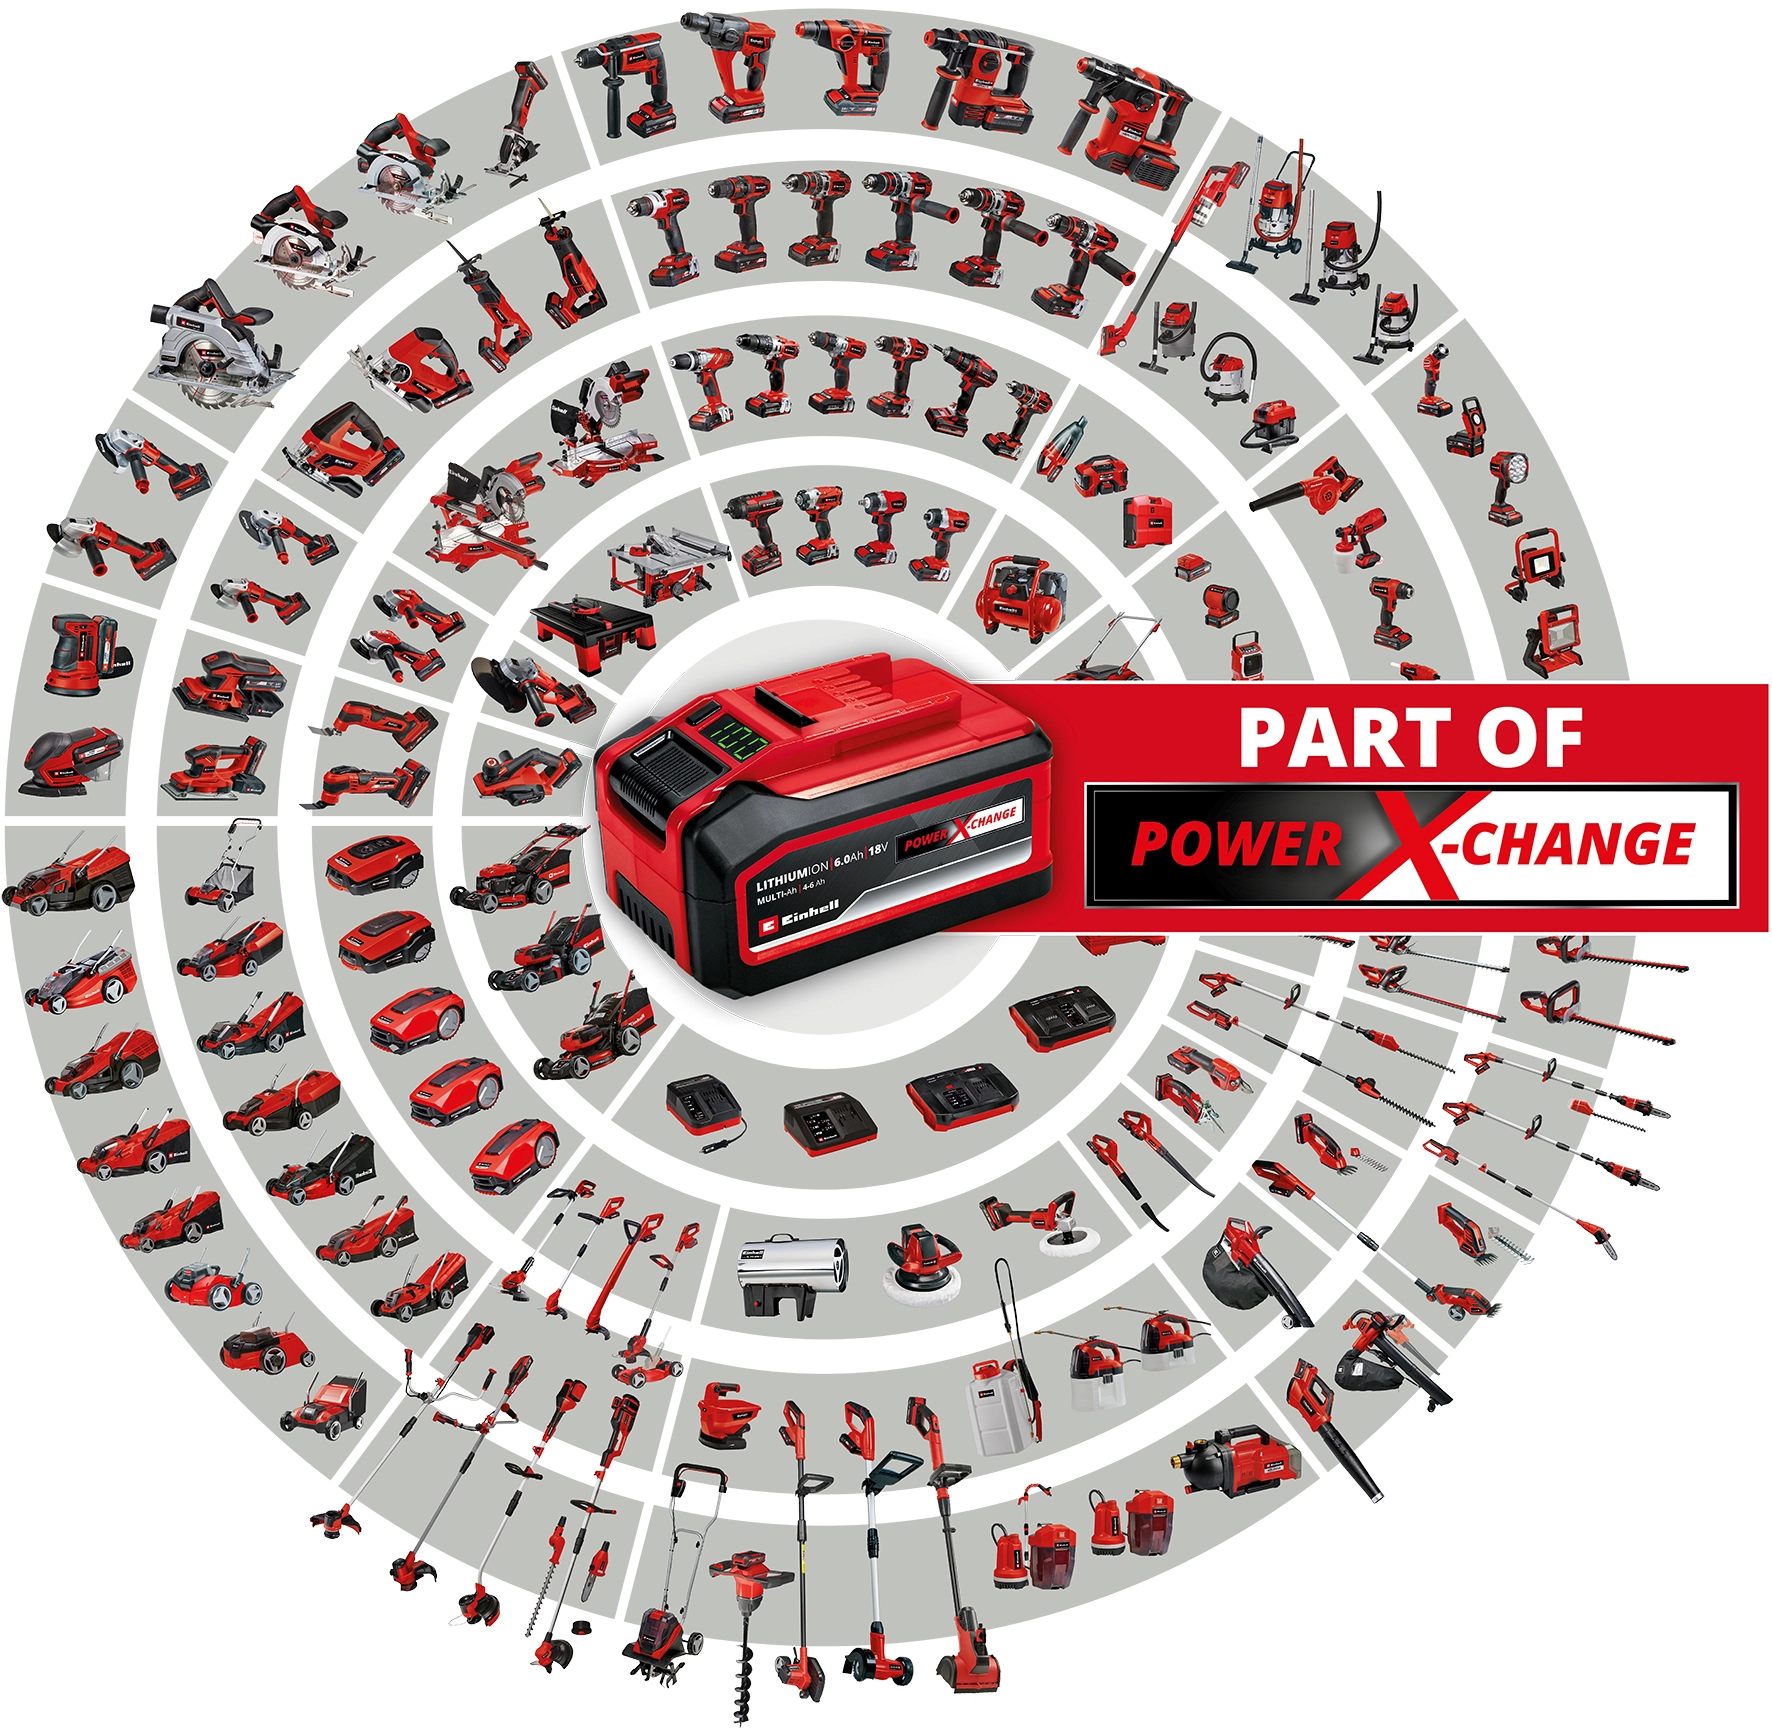 Einhell Power X-Change Akku-Kompressor Pressito 18/21 Solo kaufen bei OBI